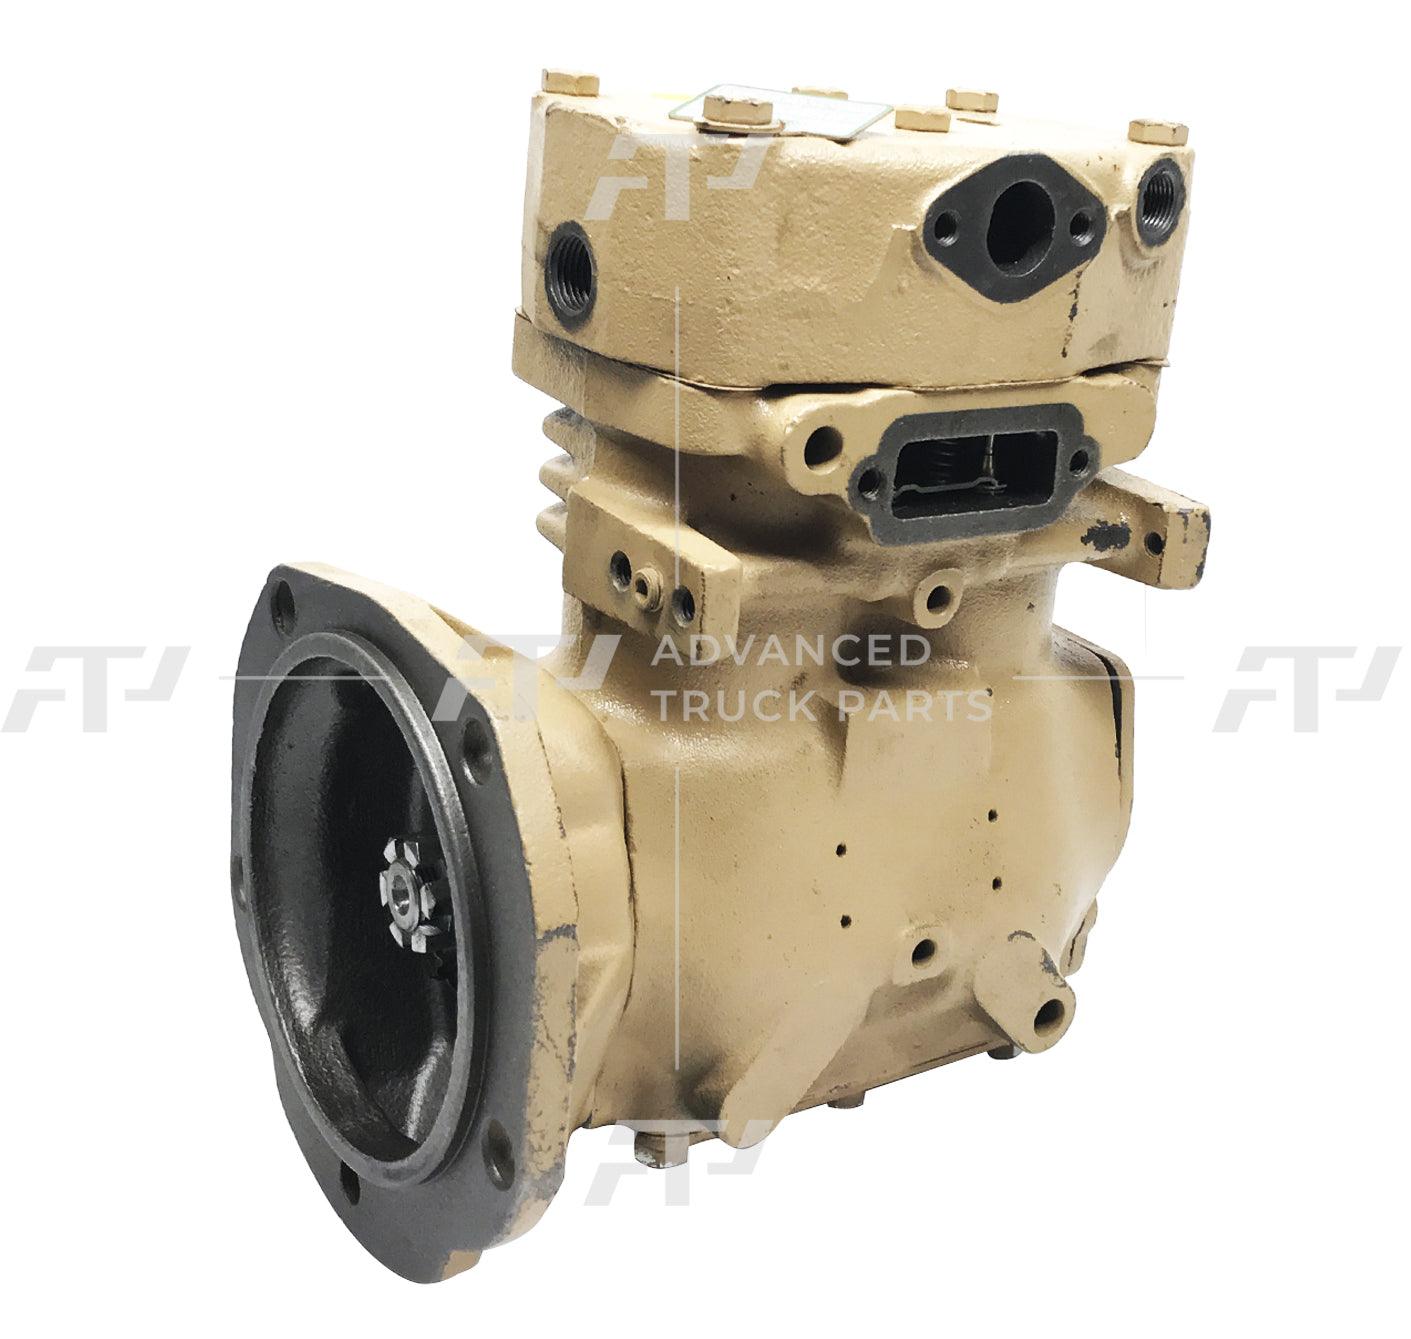 286538X Hd Plus® Air Compressor Tf501 For Detroit Diesel - ADVANCED TRUCK PARTS